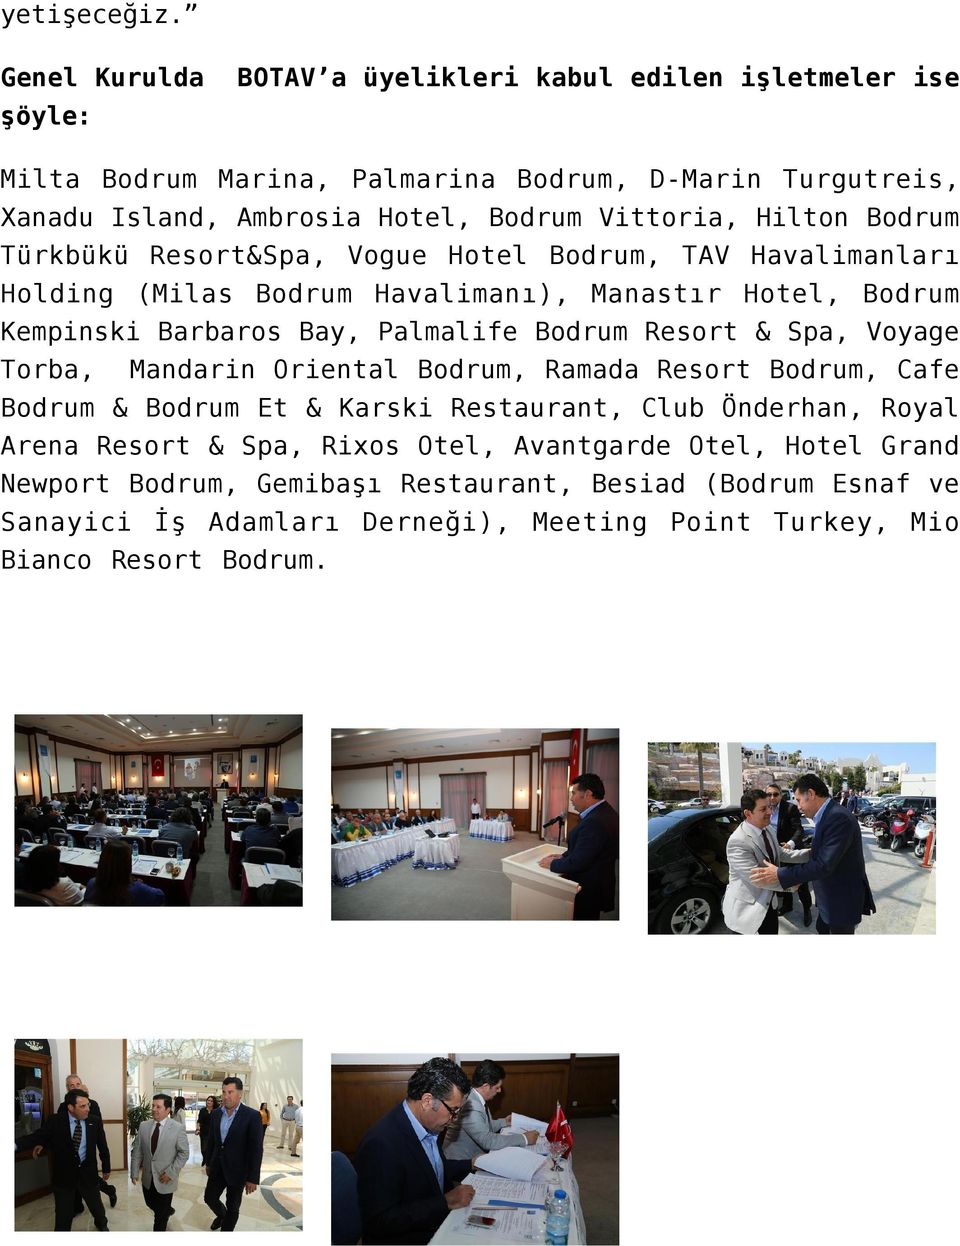 Hilton Bodrum Türkbükü Resort&Spa, Vogue Hotel Bodrum, TAV Havalimanları Holding (Milas Bodrum Havalimanı), Manastır Hotel, Bodrum Kempinski Barbaros Bay, Palmalife Bodrum